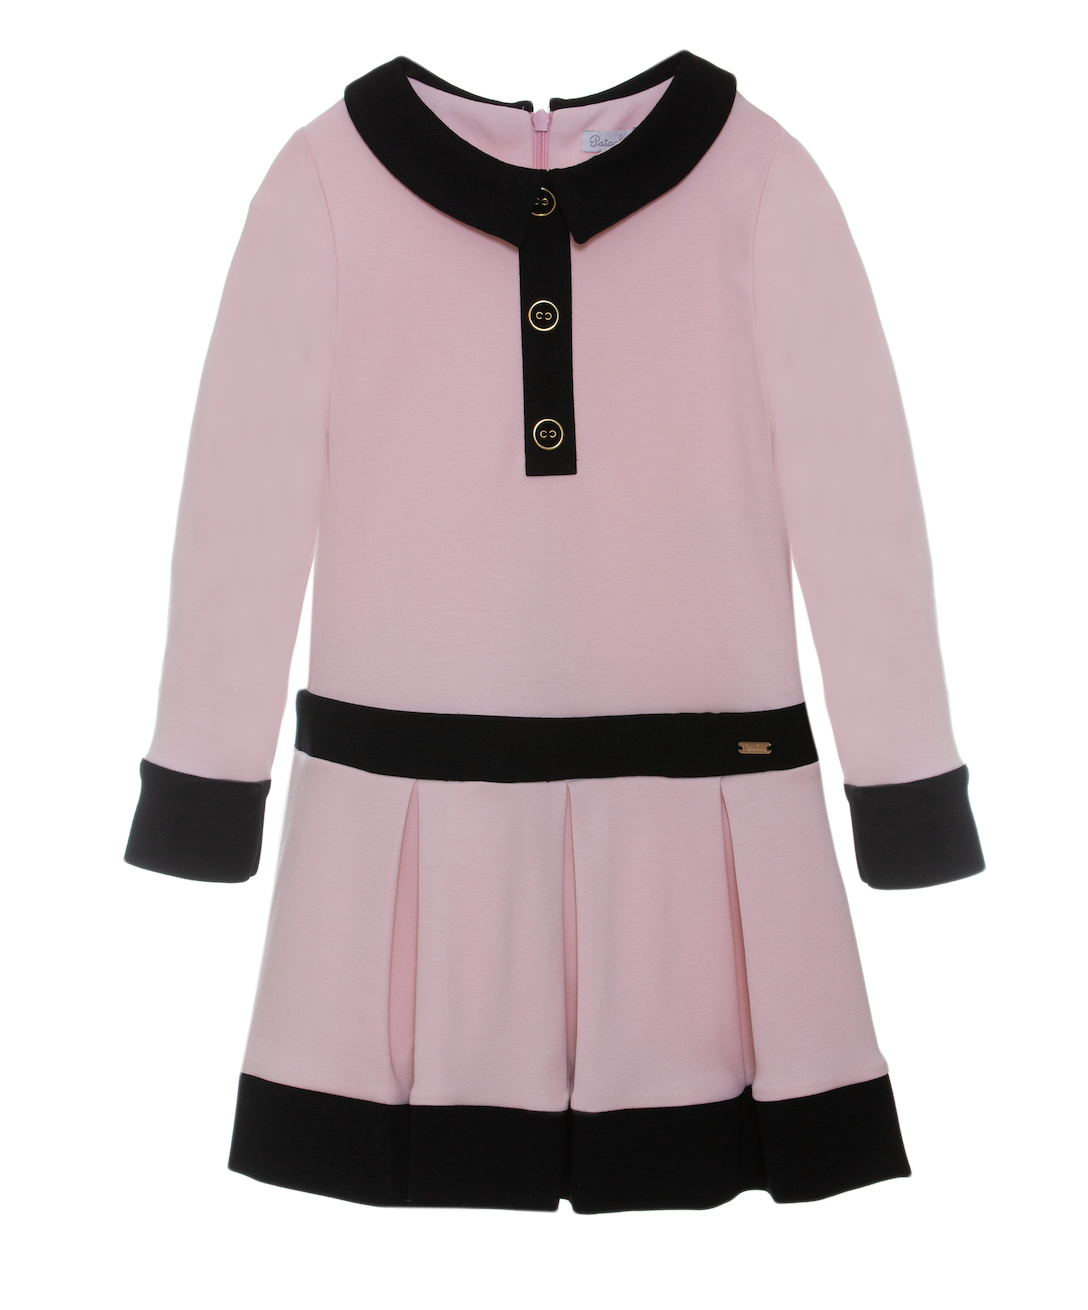 Patachou Pink & Black Dress 408 - Designer Childrenswear - Bunny and ...